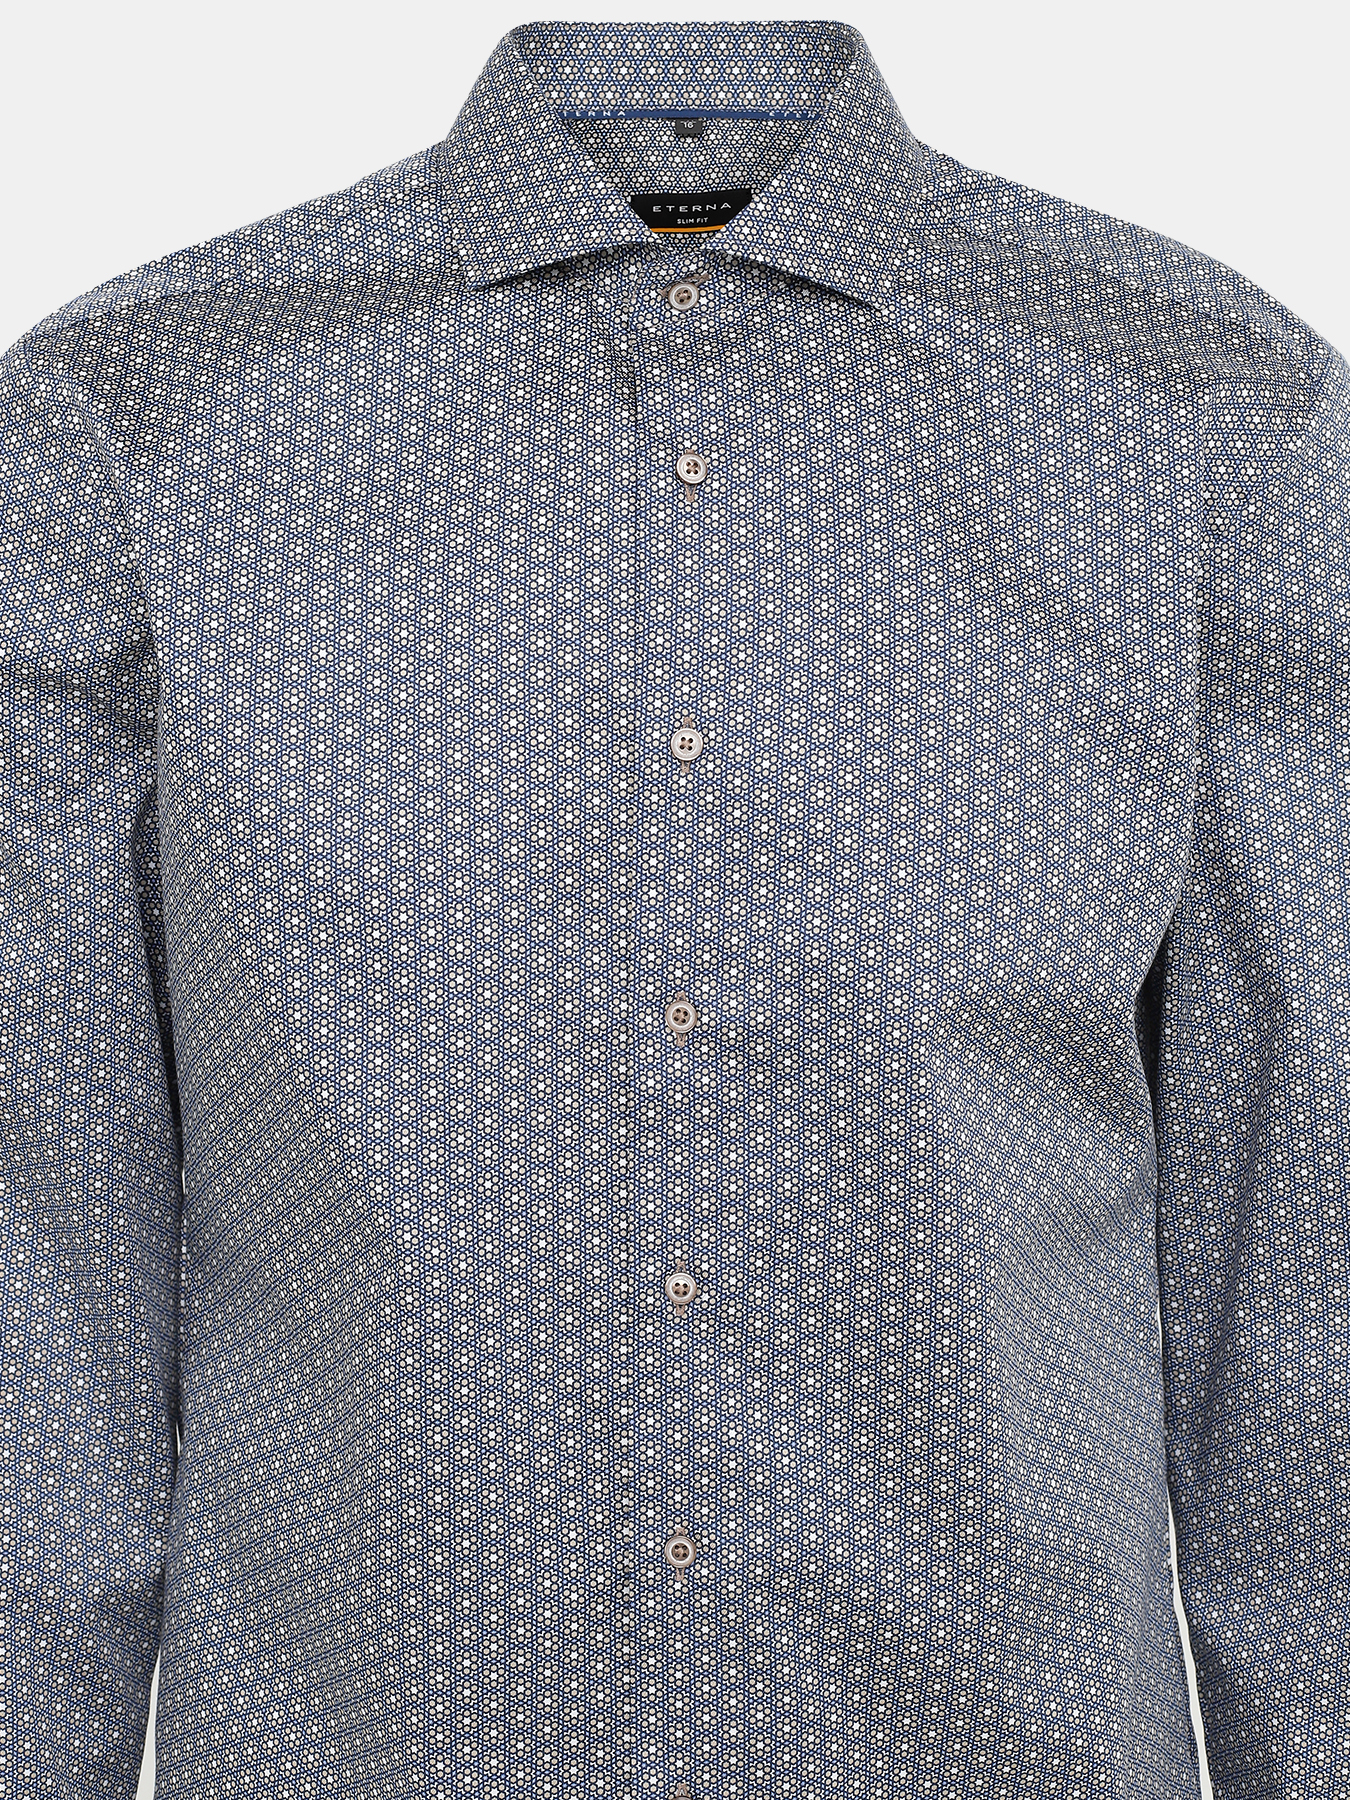 Рубашка Eterna 404866-051, цвет синий, размер 56 - фото 3